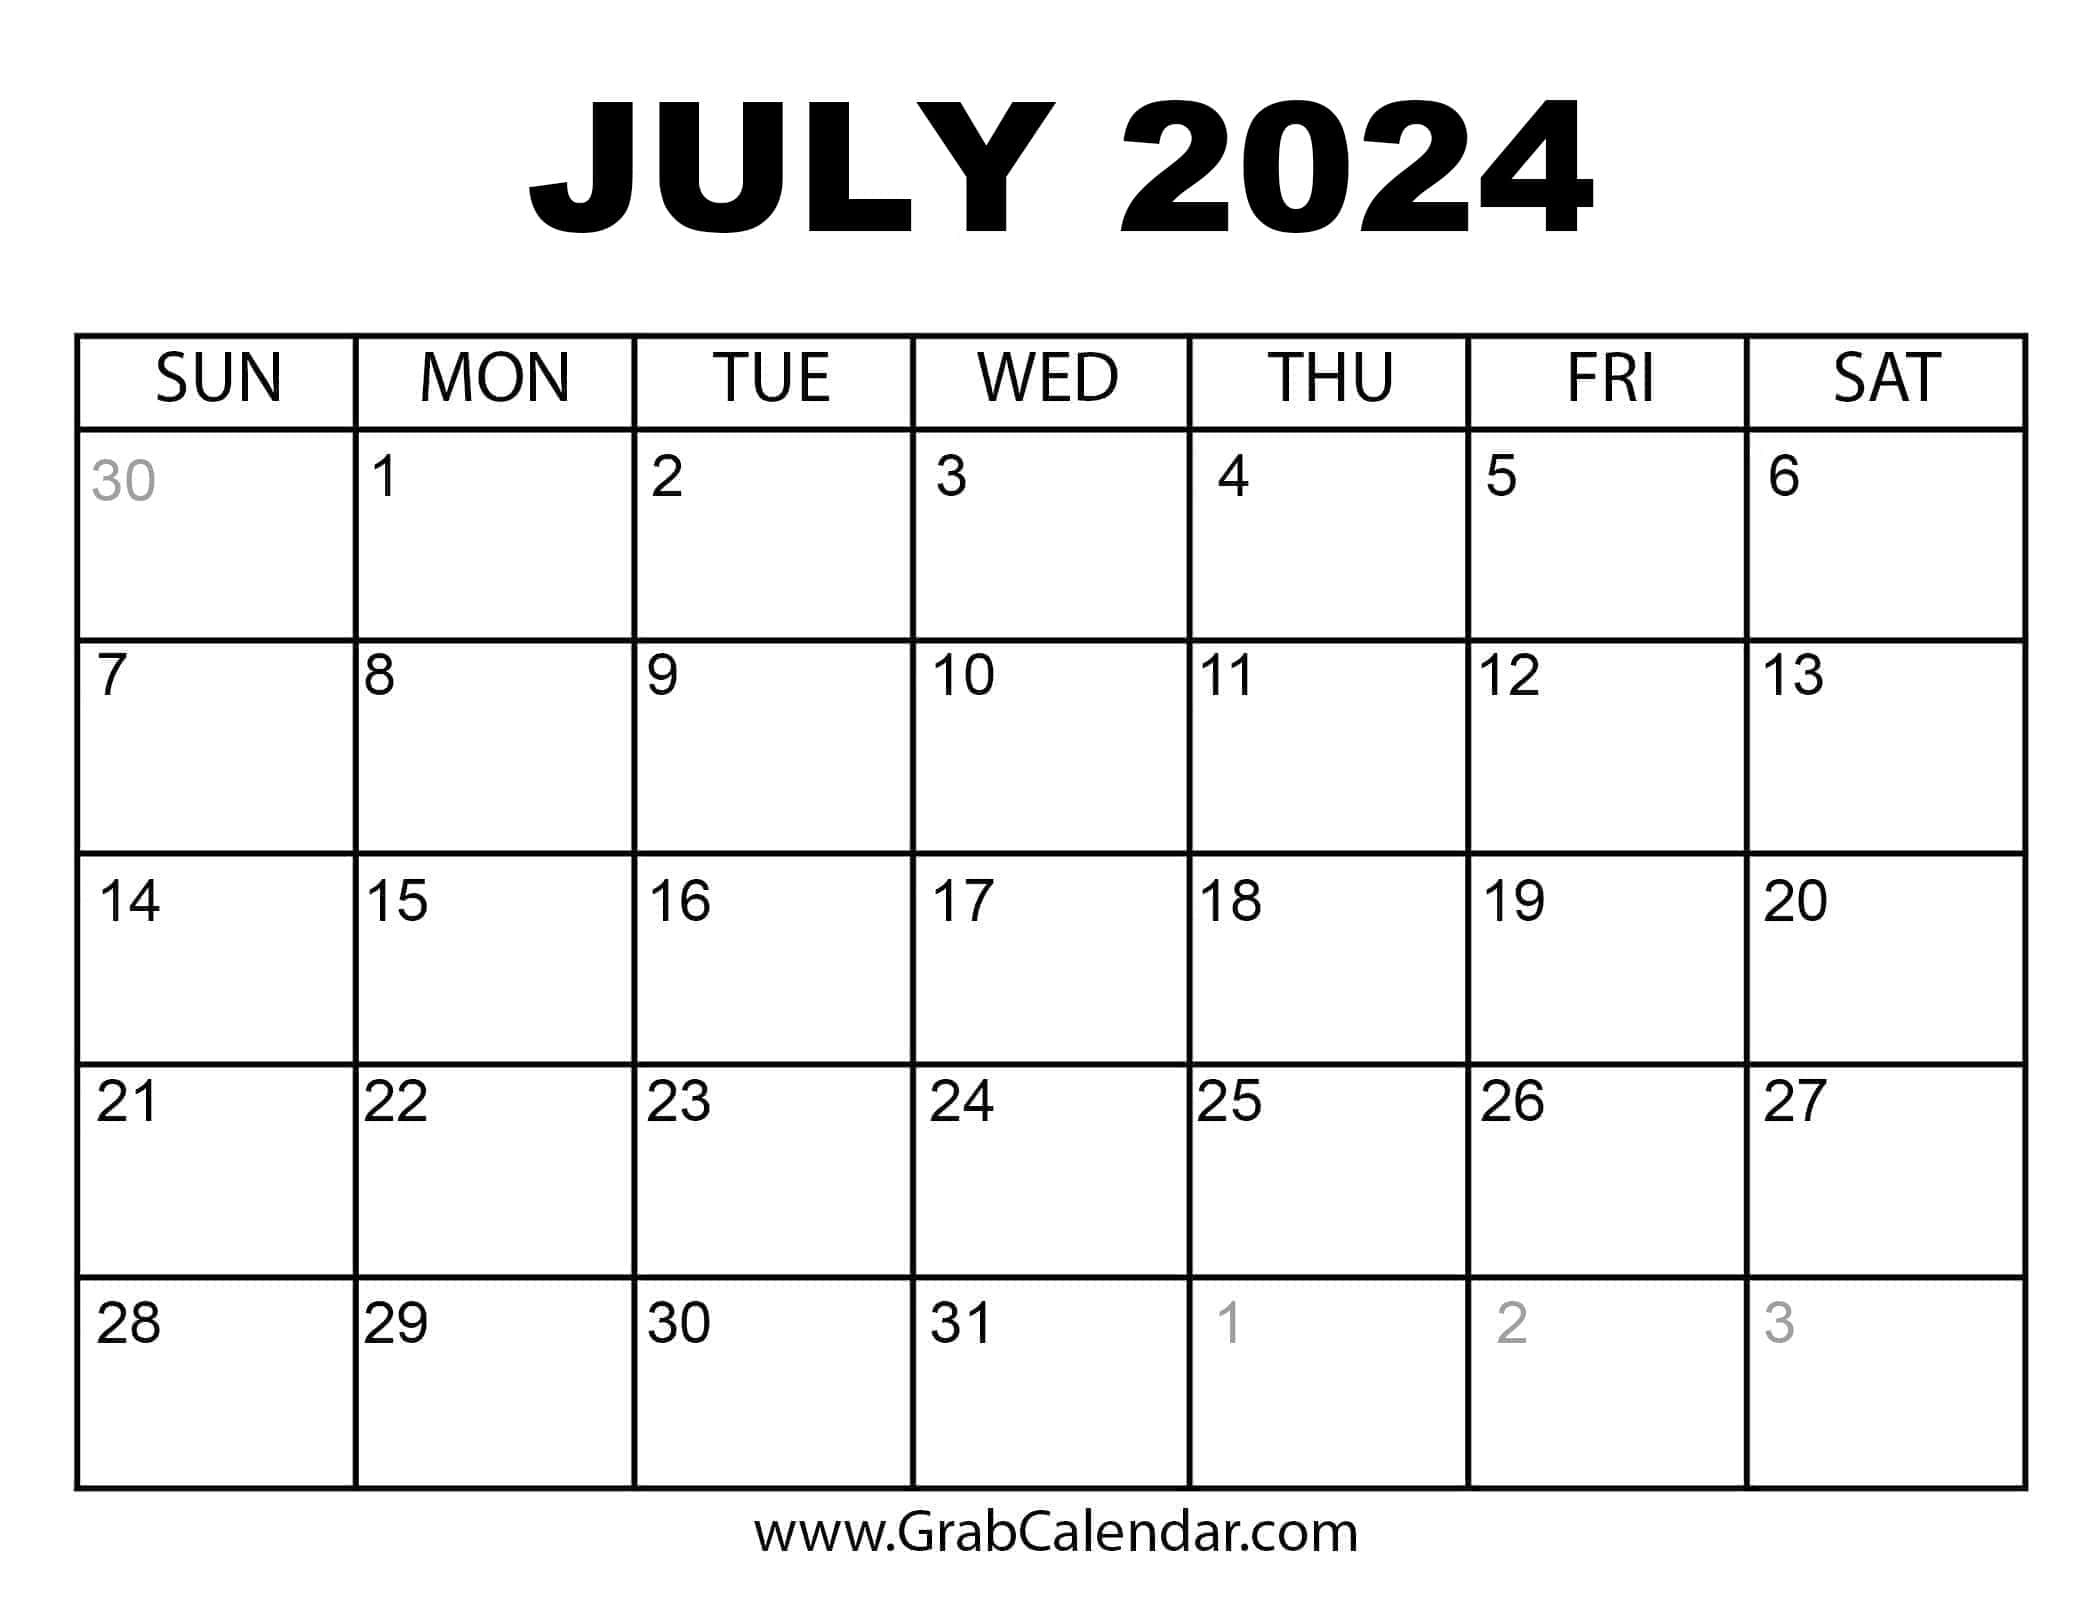 Printable July 2024 Calendar pertaining to July Fun Facts Calendar 2024